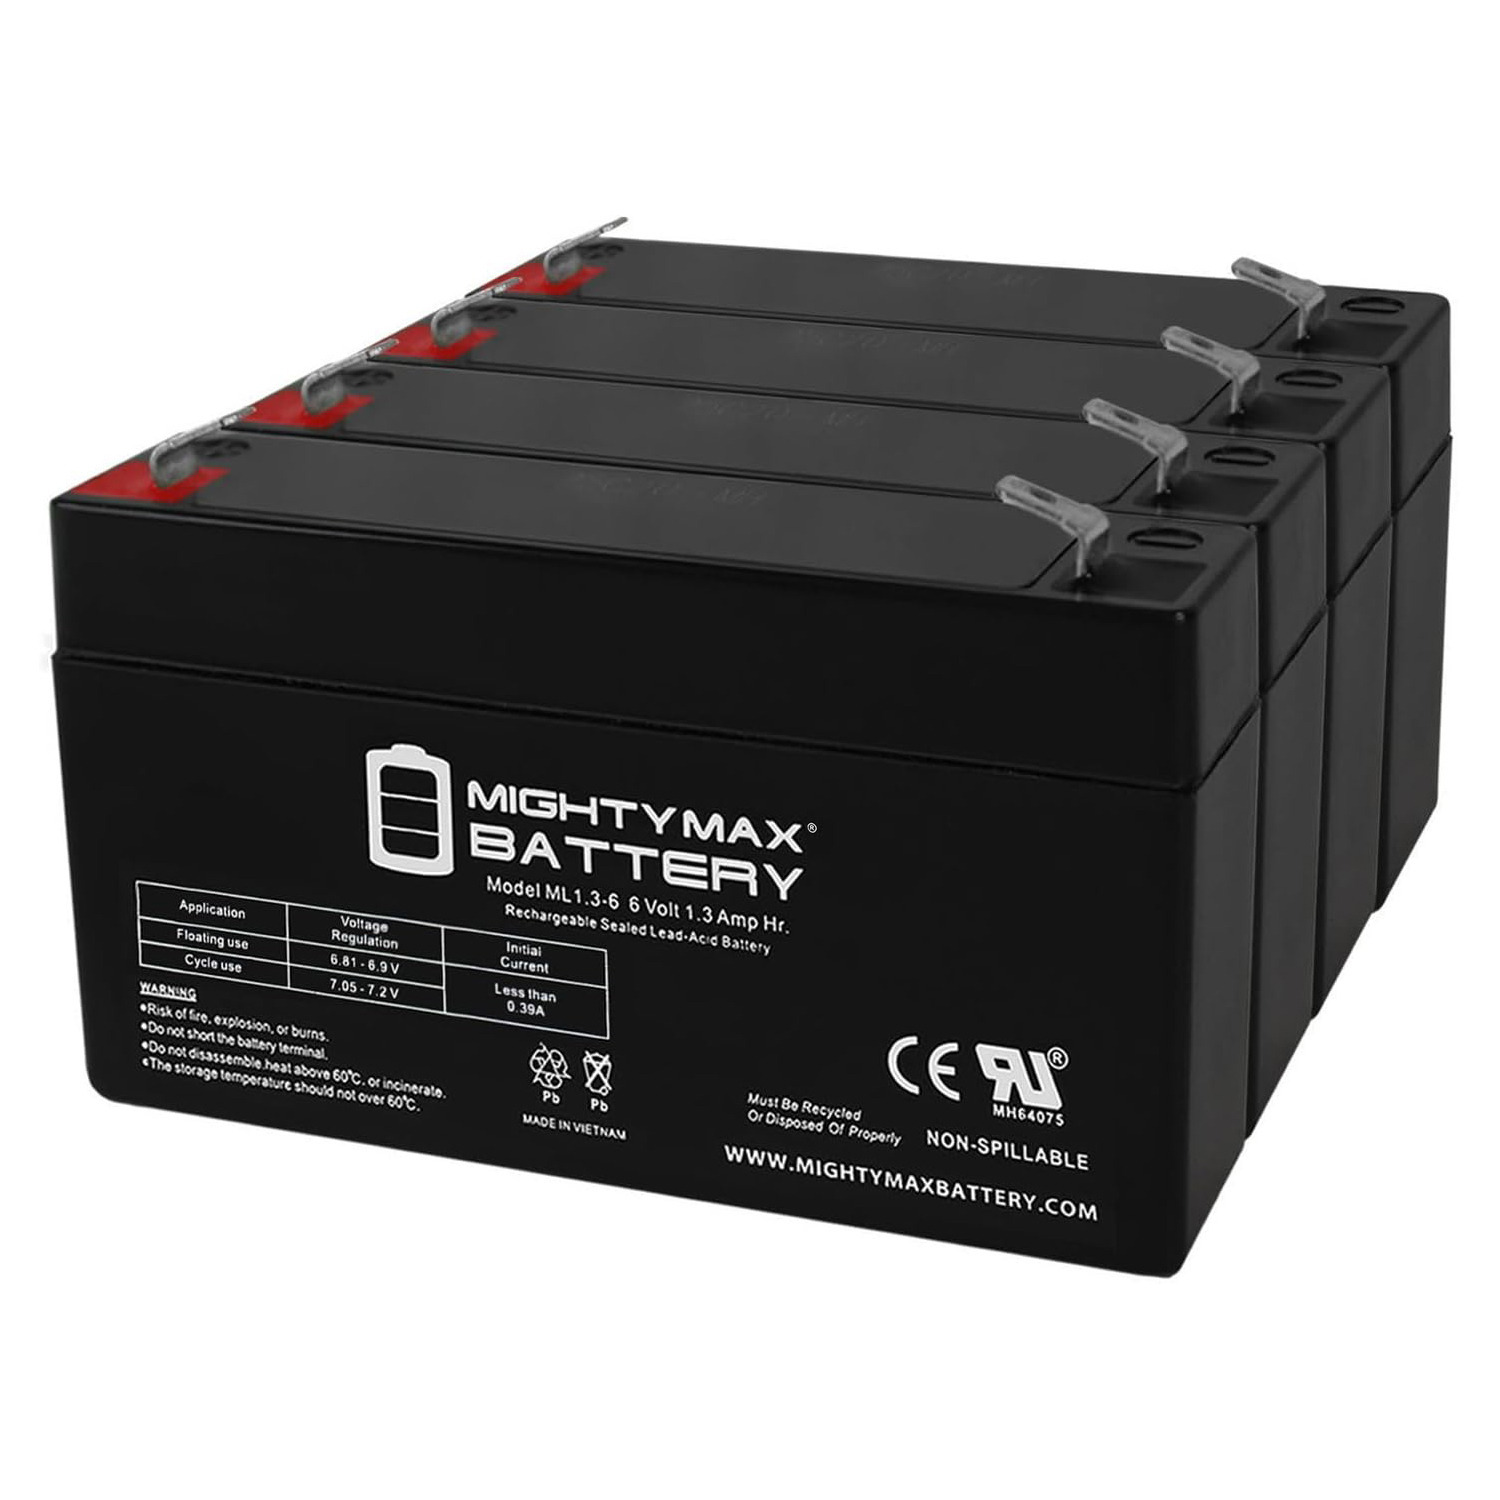 6V 1.3Ah SLA Battery replaces pe6v1.2 bp1.2-6 es1.2-6 cb-1.3-6 - 4 Pack